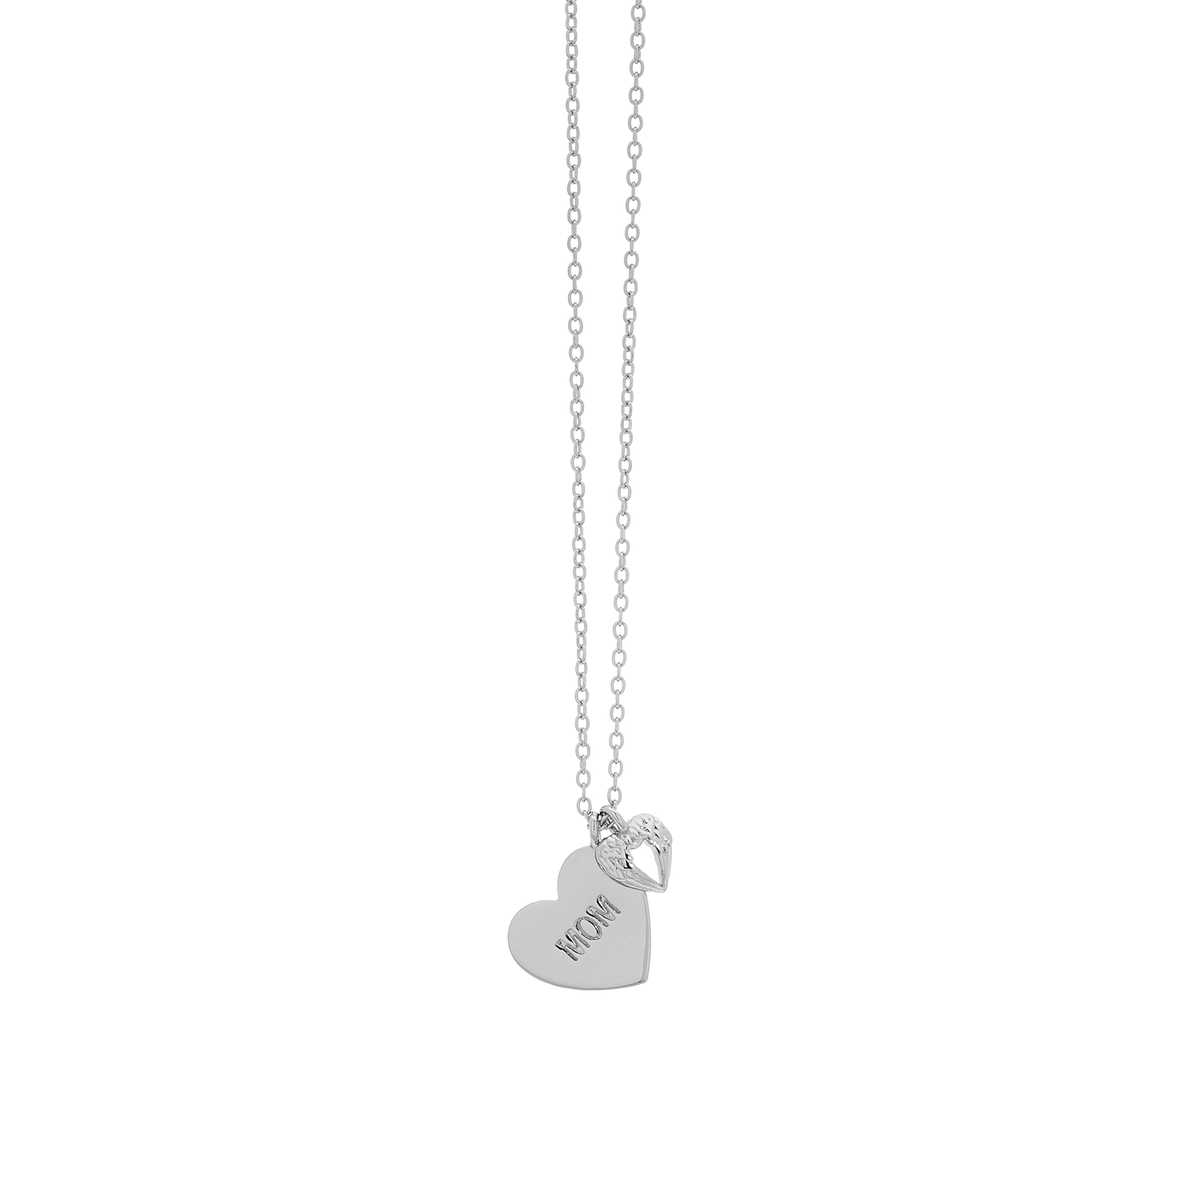 Buy Platinum Necklace | Platinum Neckware for Women | Senco Gold and  Diamonds